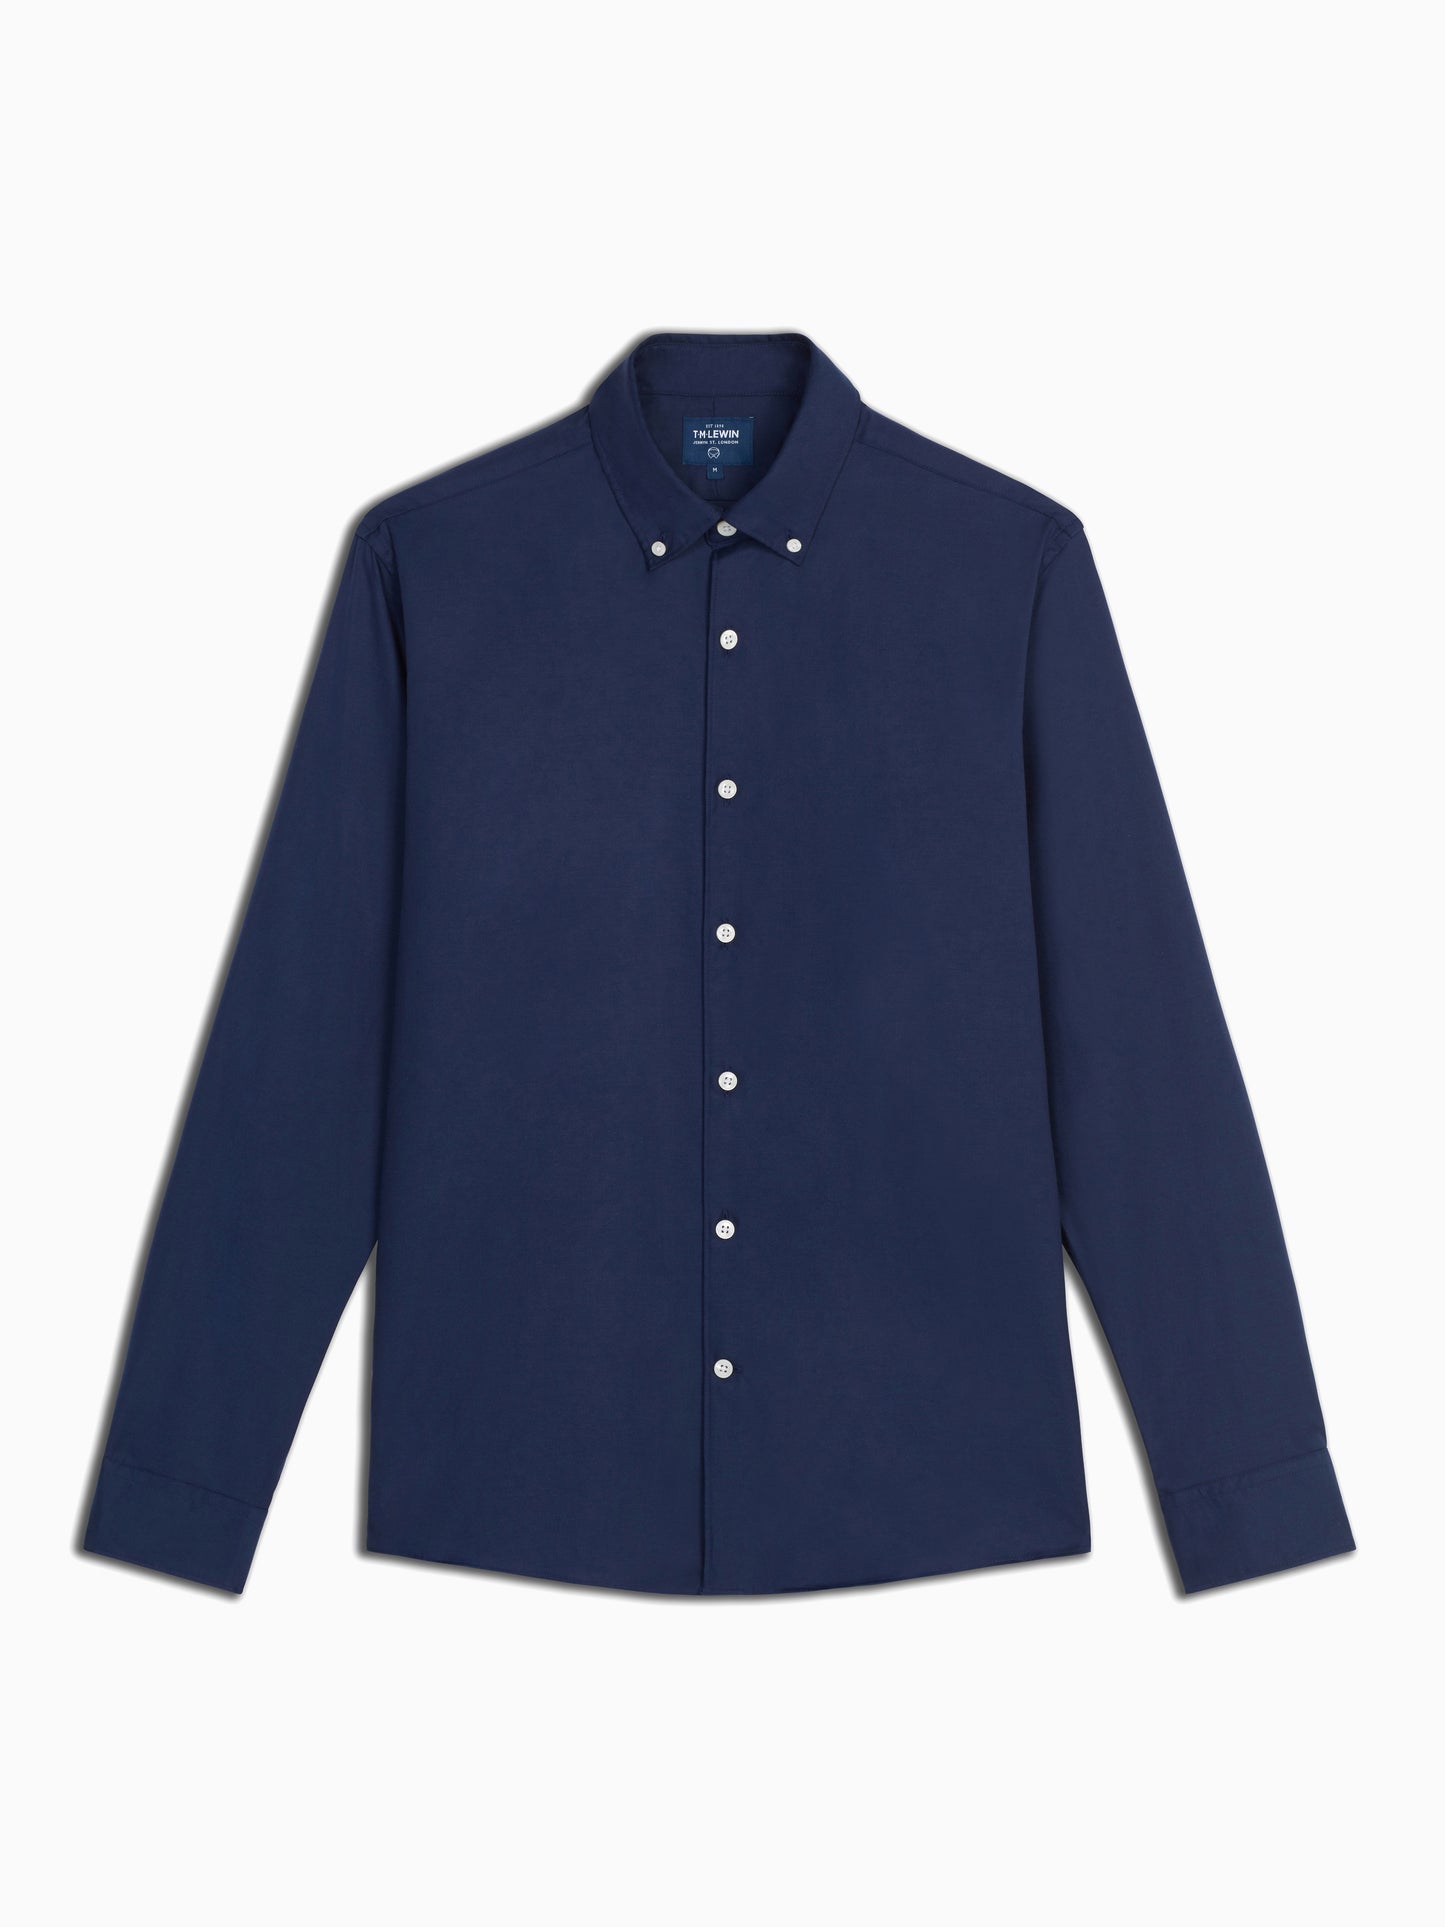 Plain Button Down Collar Navy Blue Twill Casual Shirt